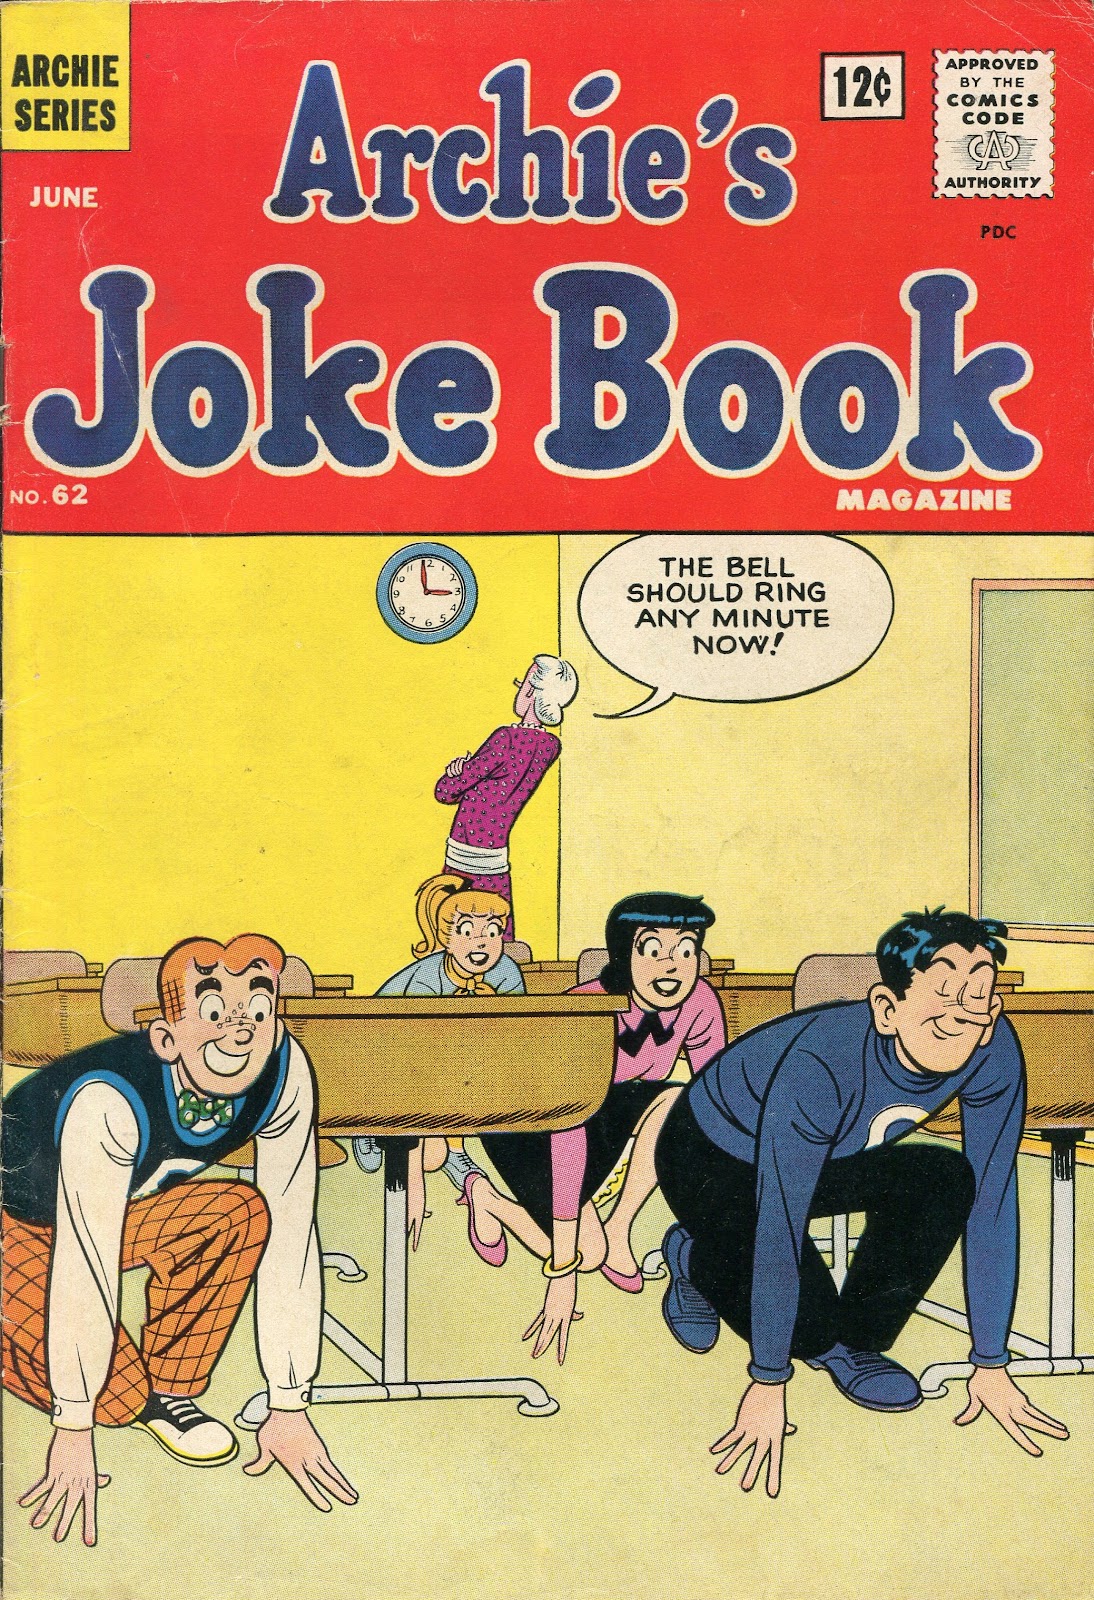 Archie's Joke Book Magazine issue 62 - Page 1